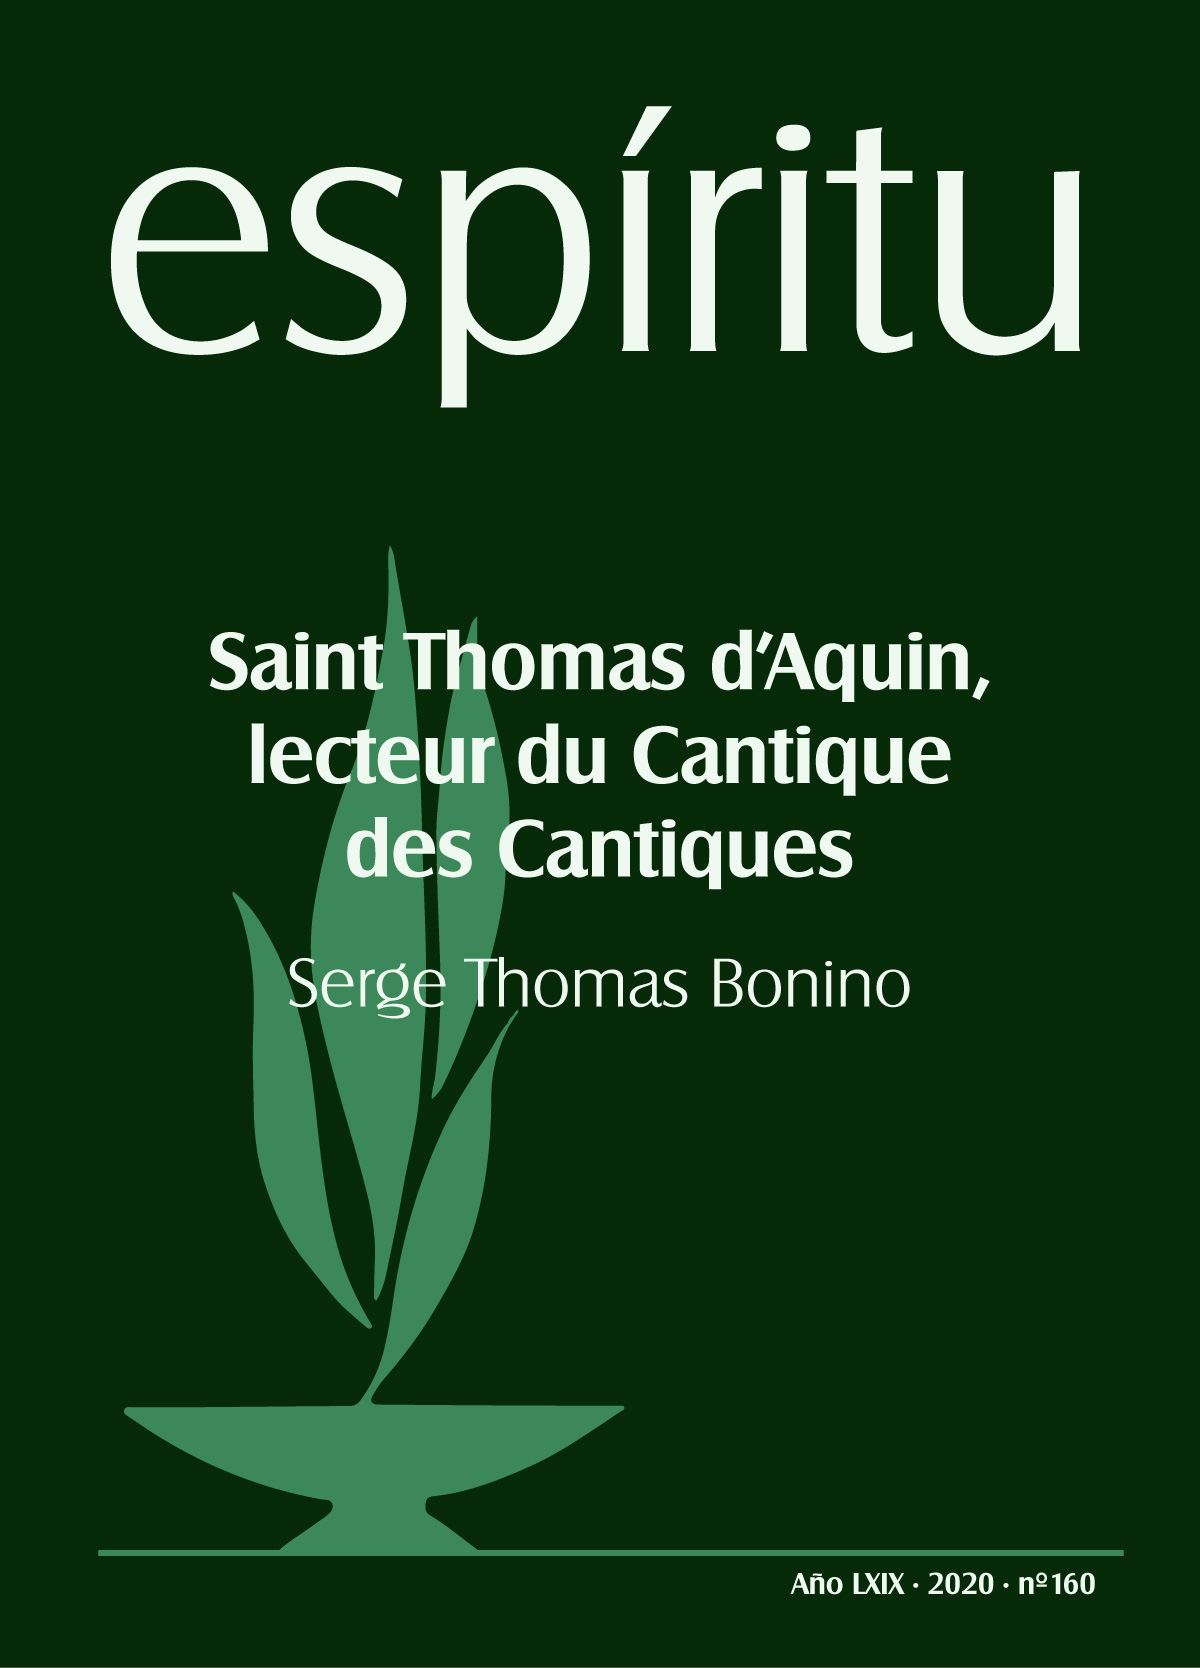 SERGE THOMAS BONINO. Saint Thomas d’Aquin, lecteur du Cantique des Cantiques